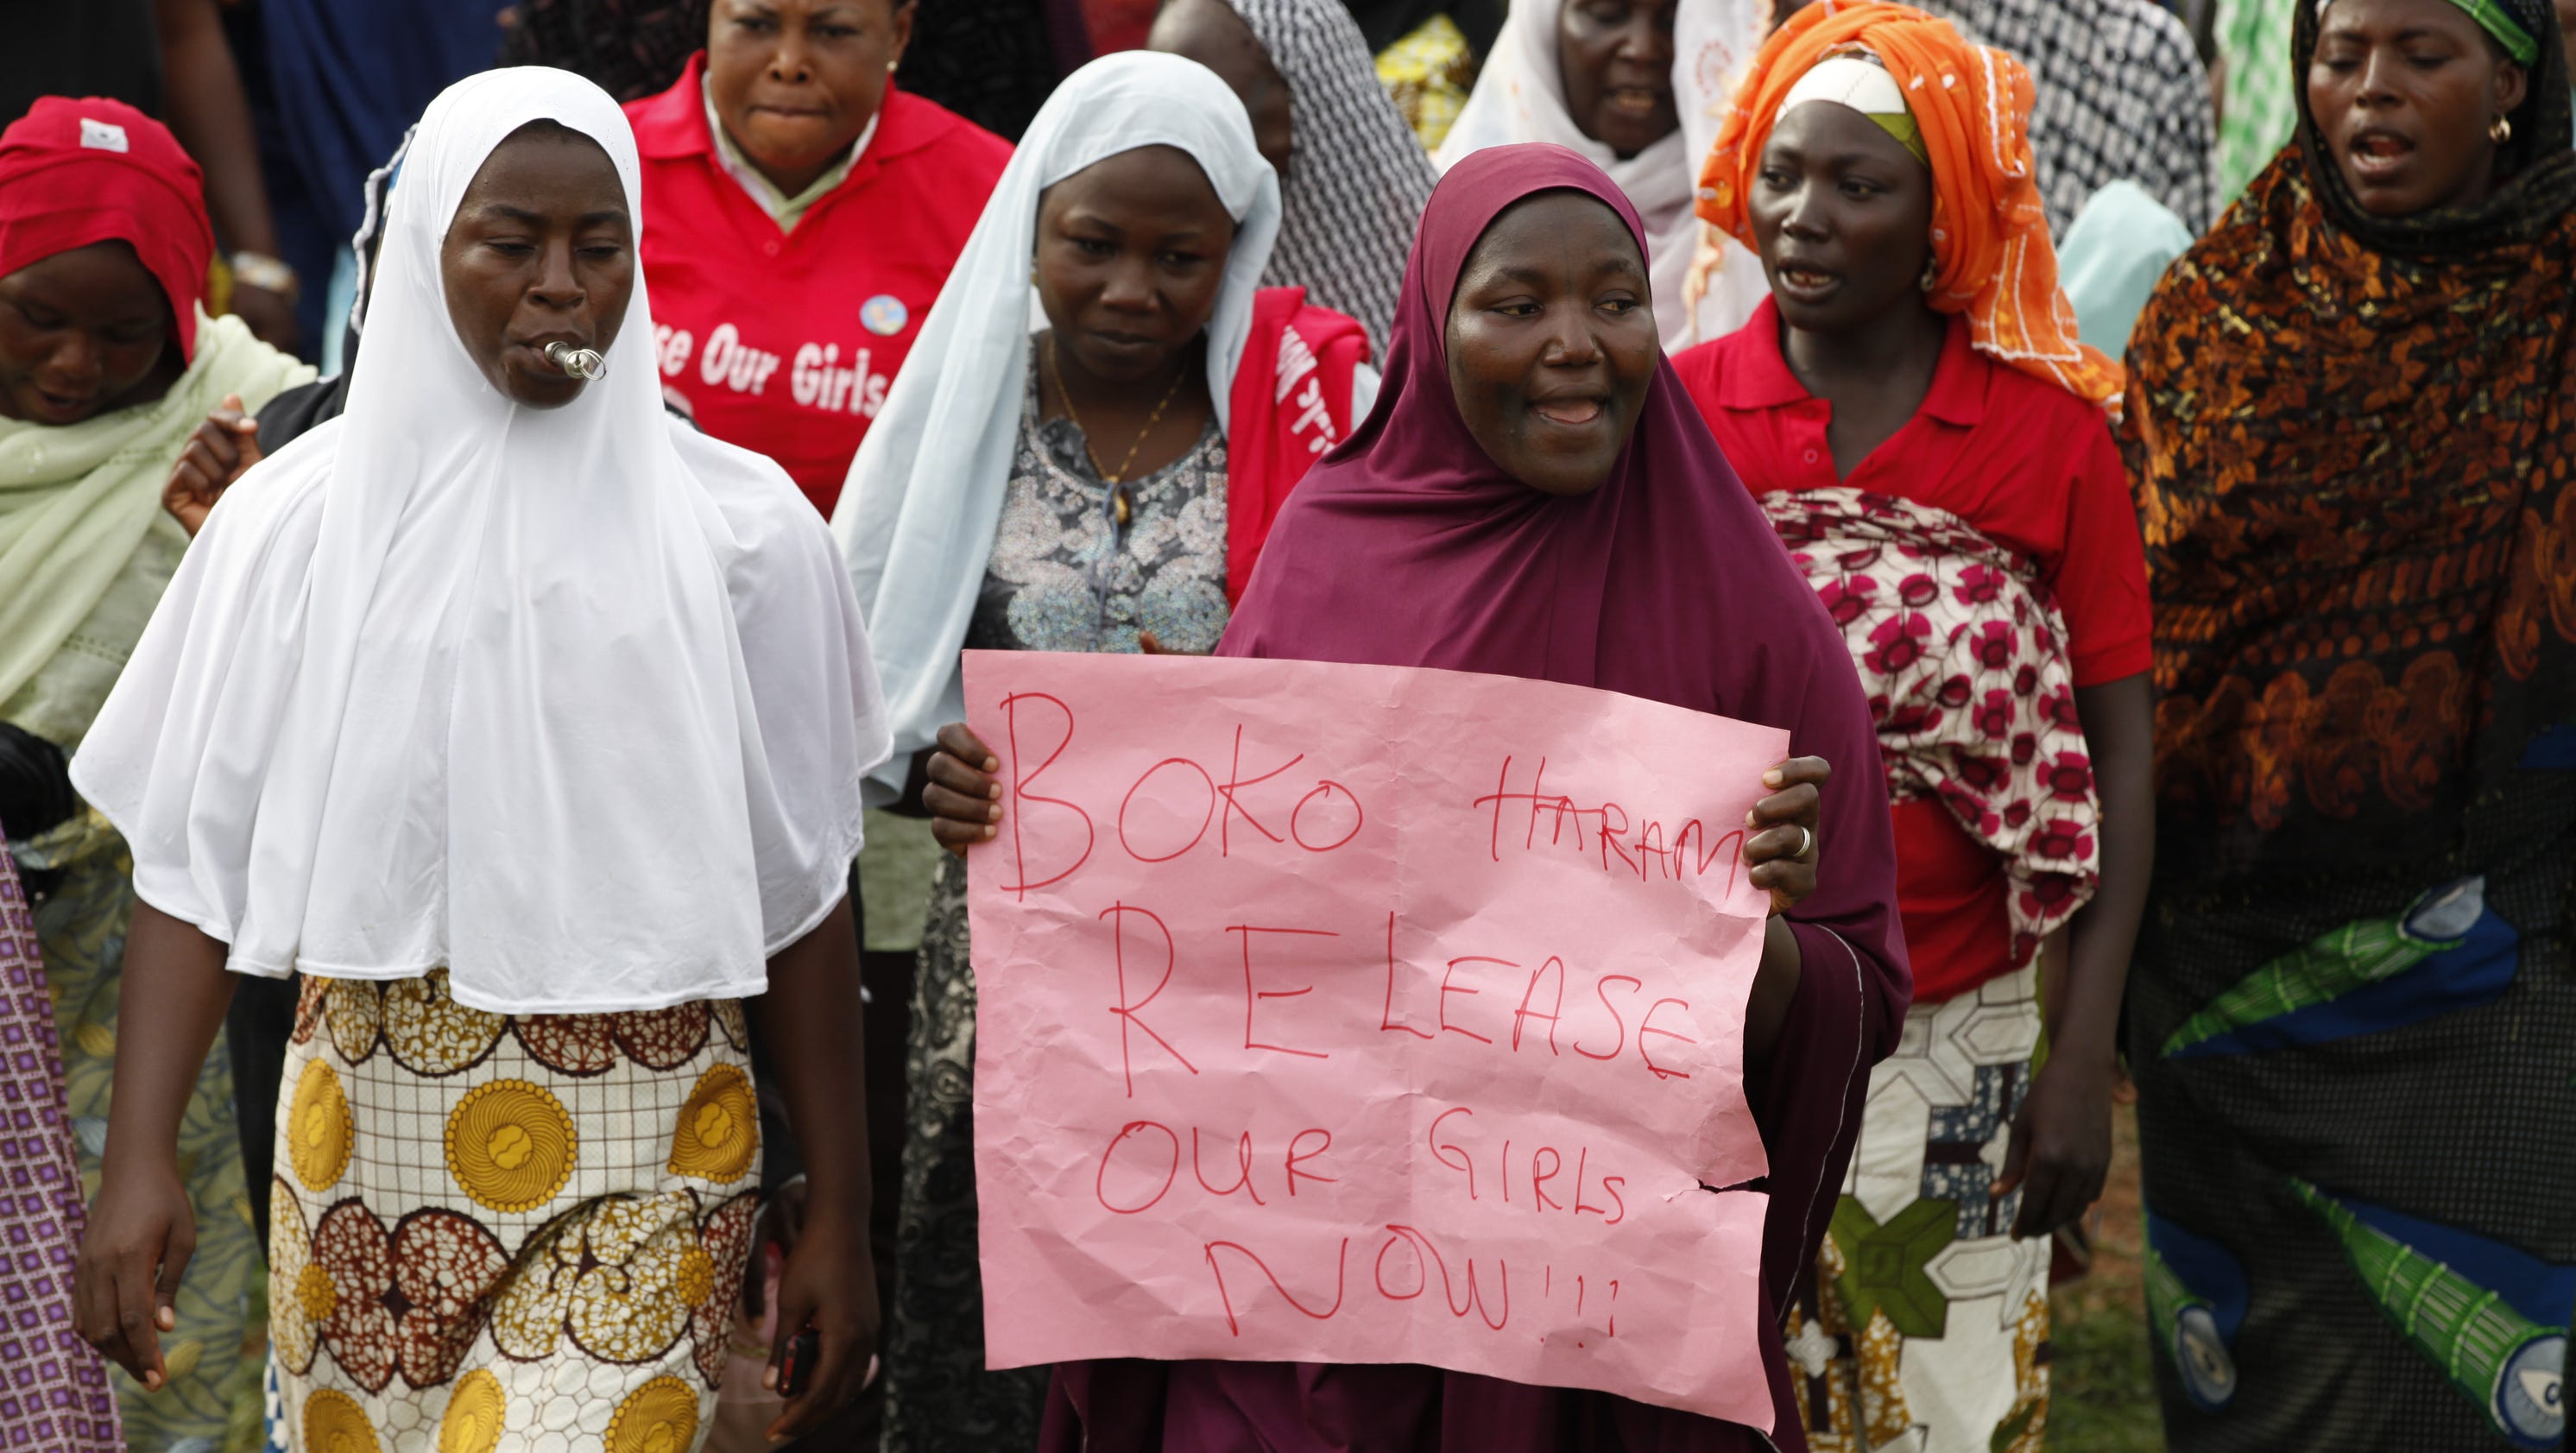 Reports: 4 Nigerian girls escape Boko Haram